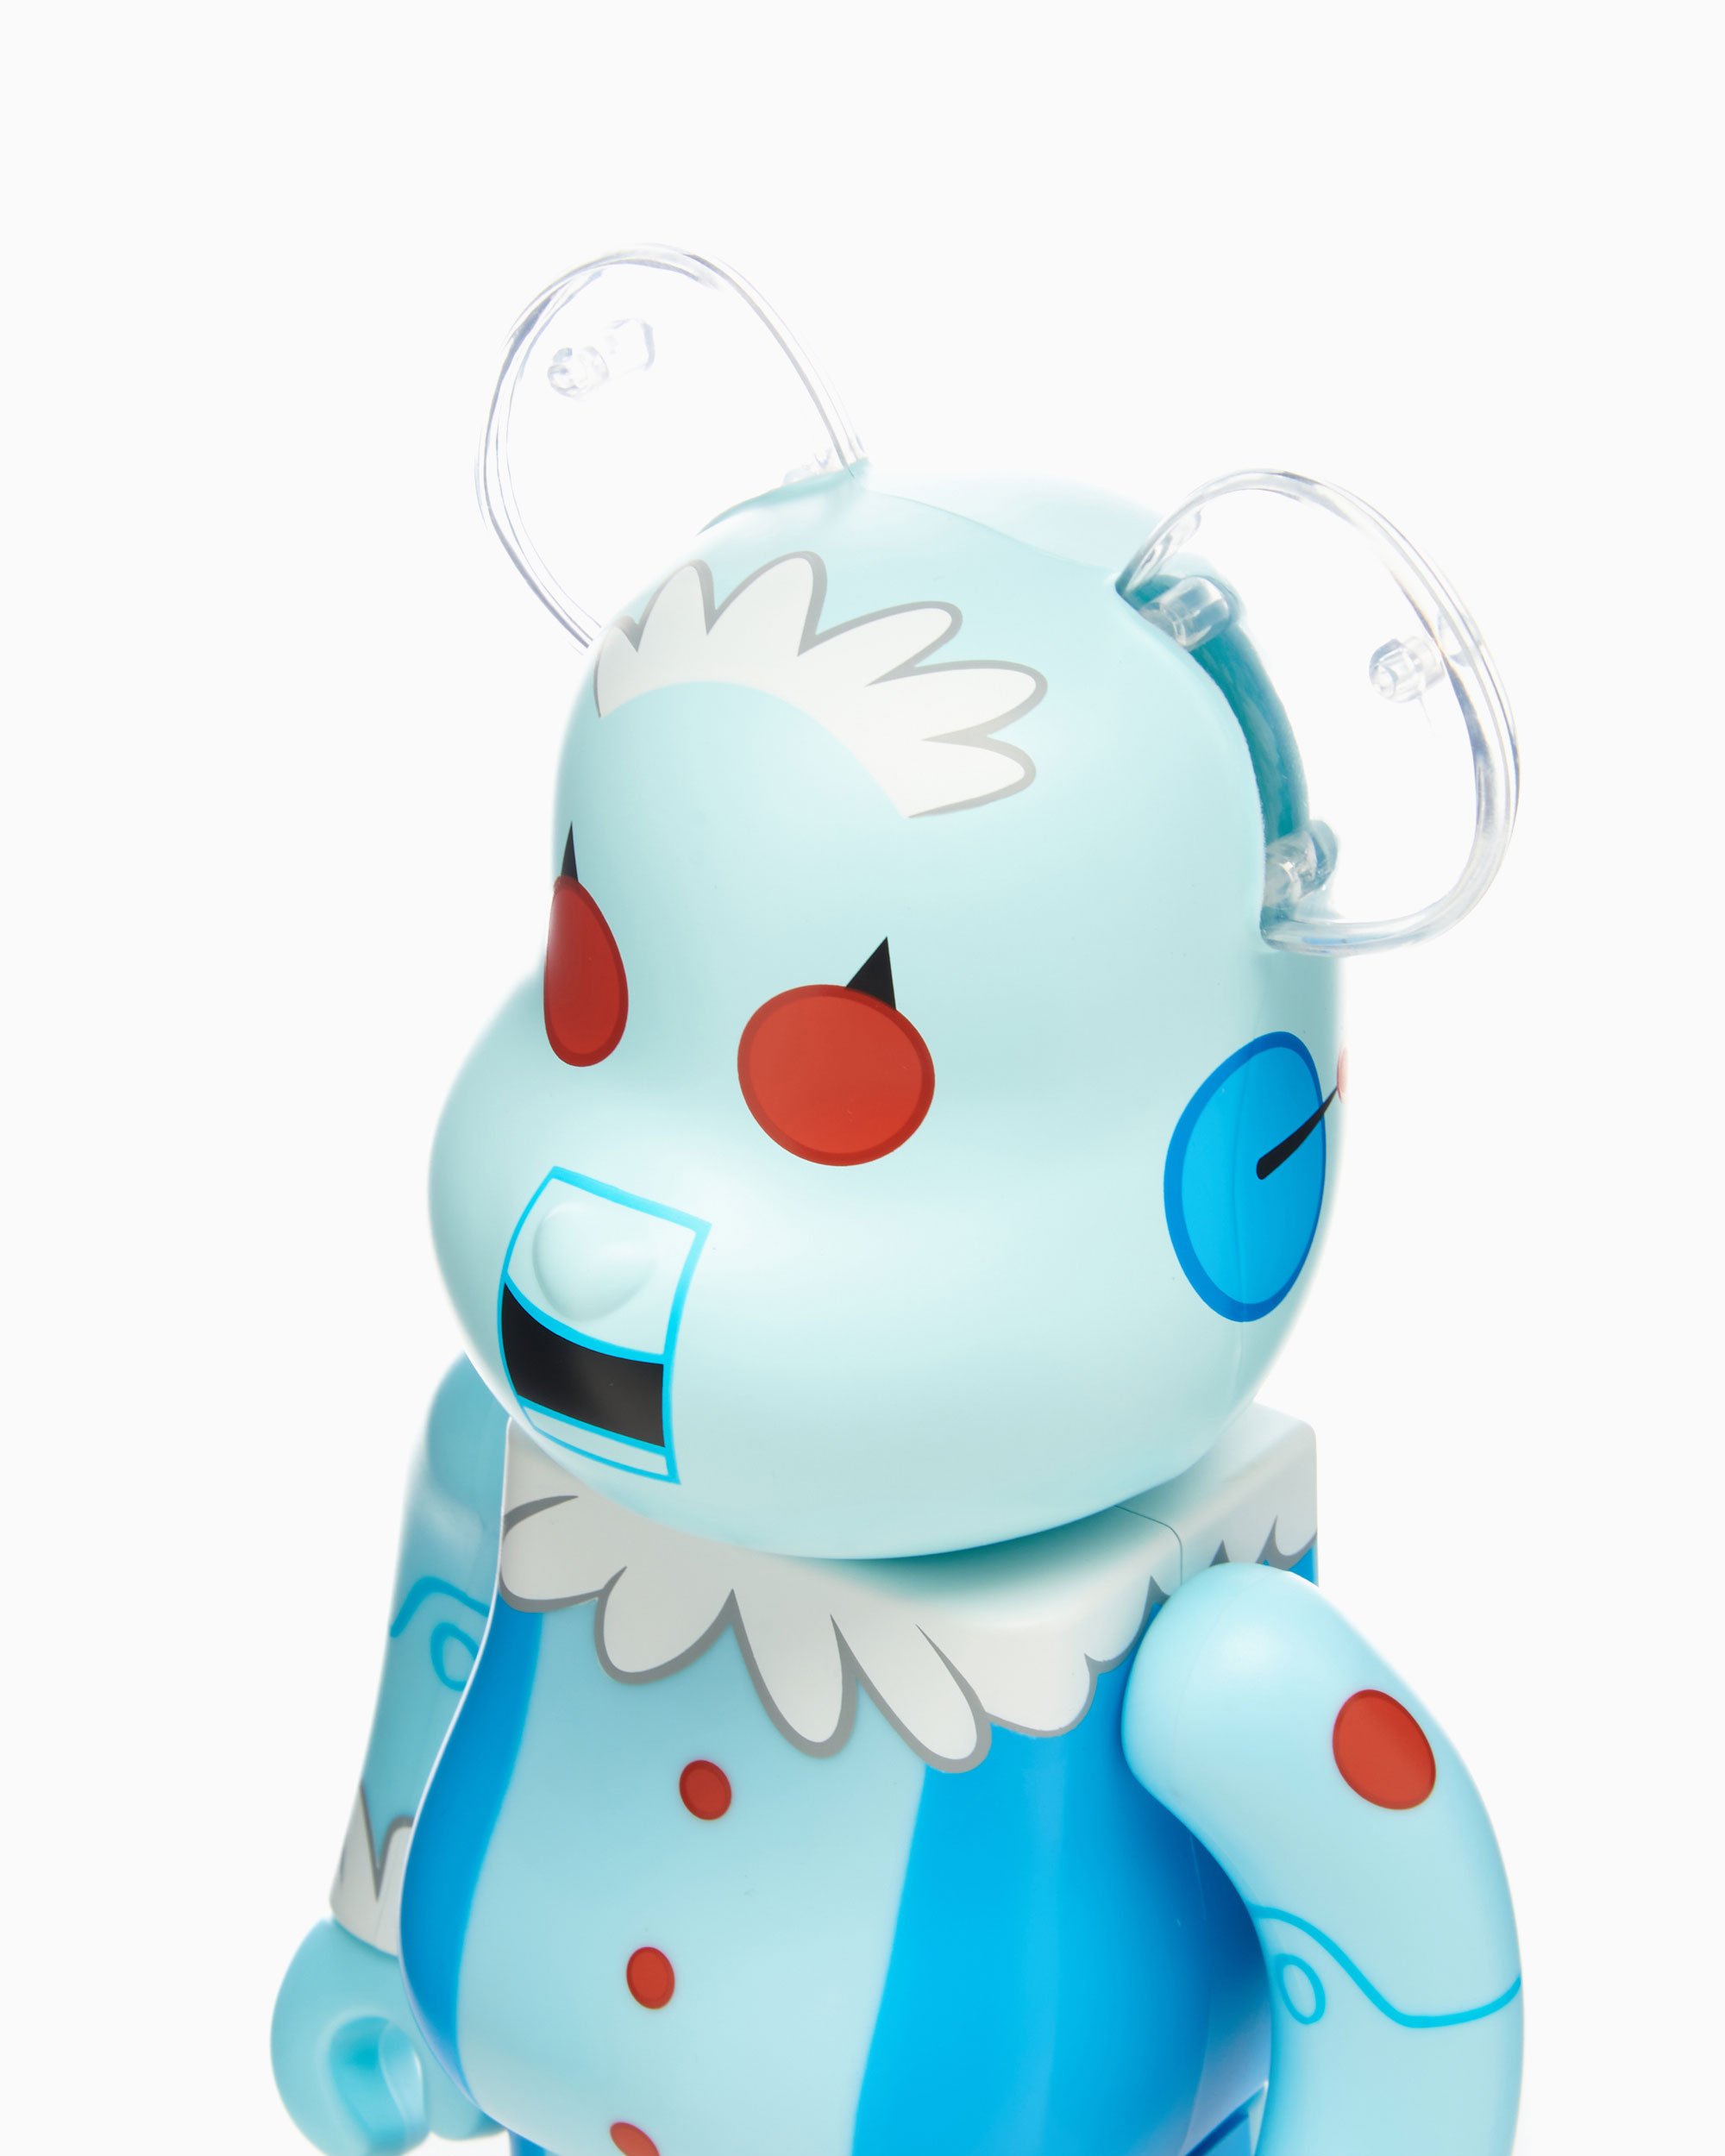 Medicom Toy Be@rbrick Rosie The Robot 100%+400%